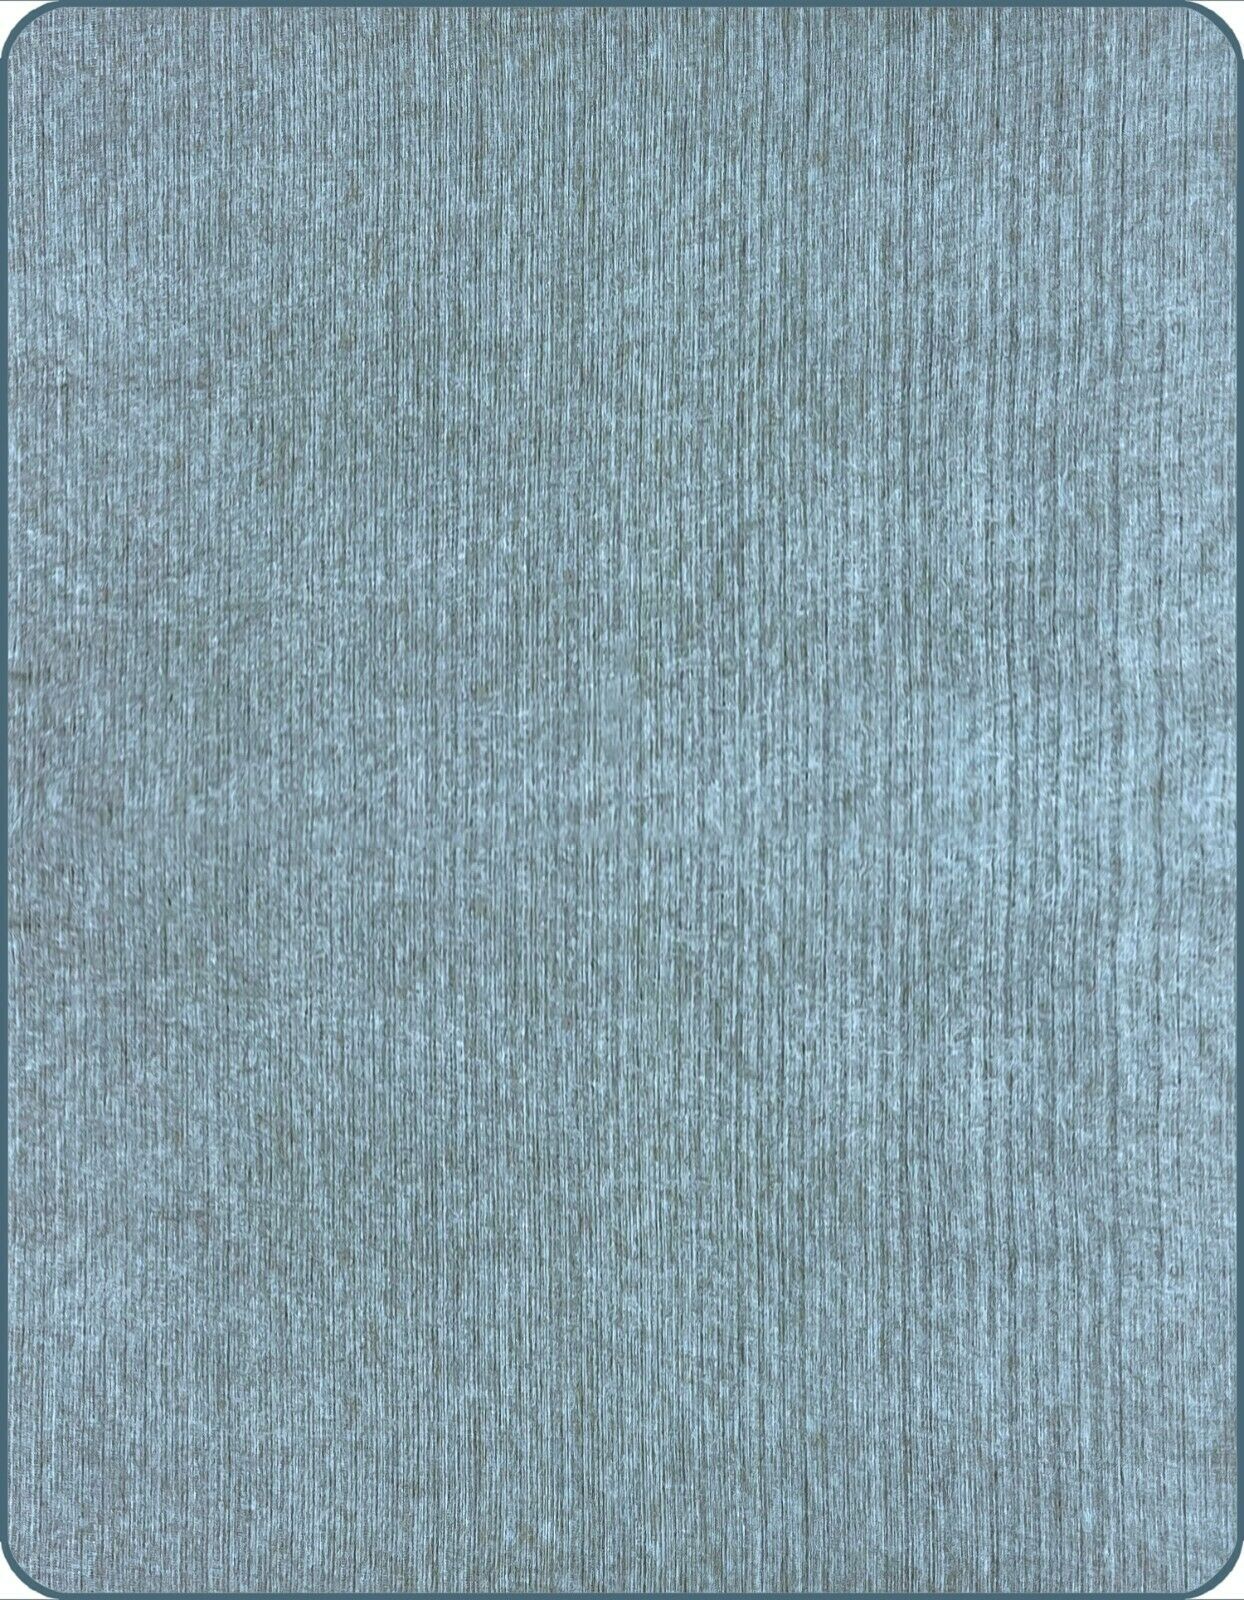 Llacao - Baby Alpaca Wool Throw Blanket / Sofa Cover - Queen 93" x 68" - plain graphite